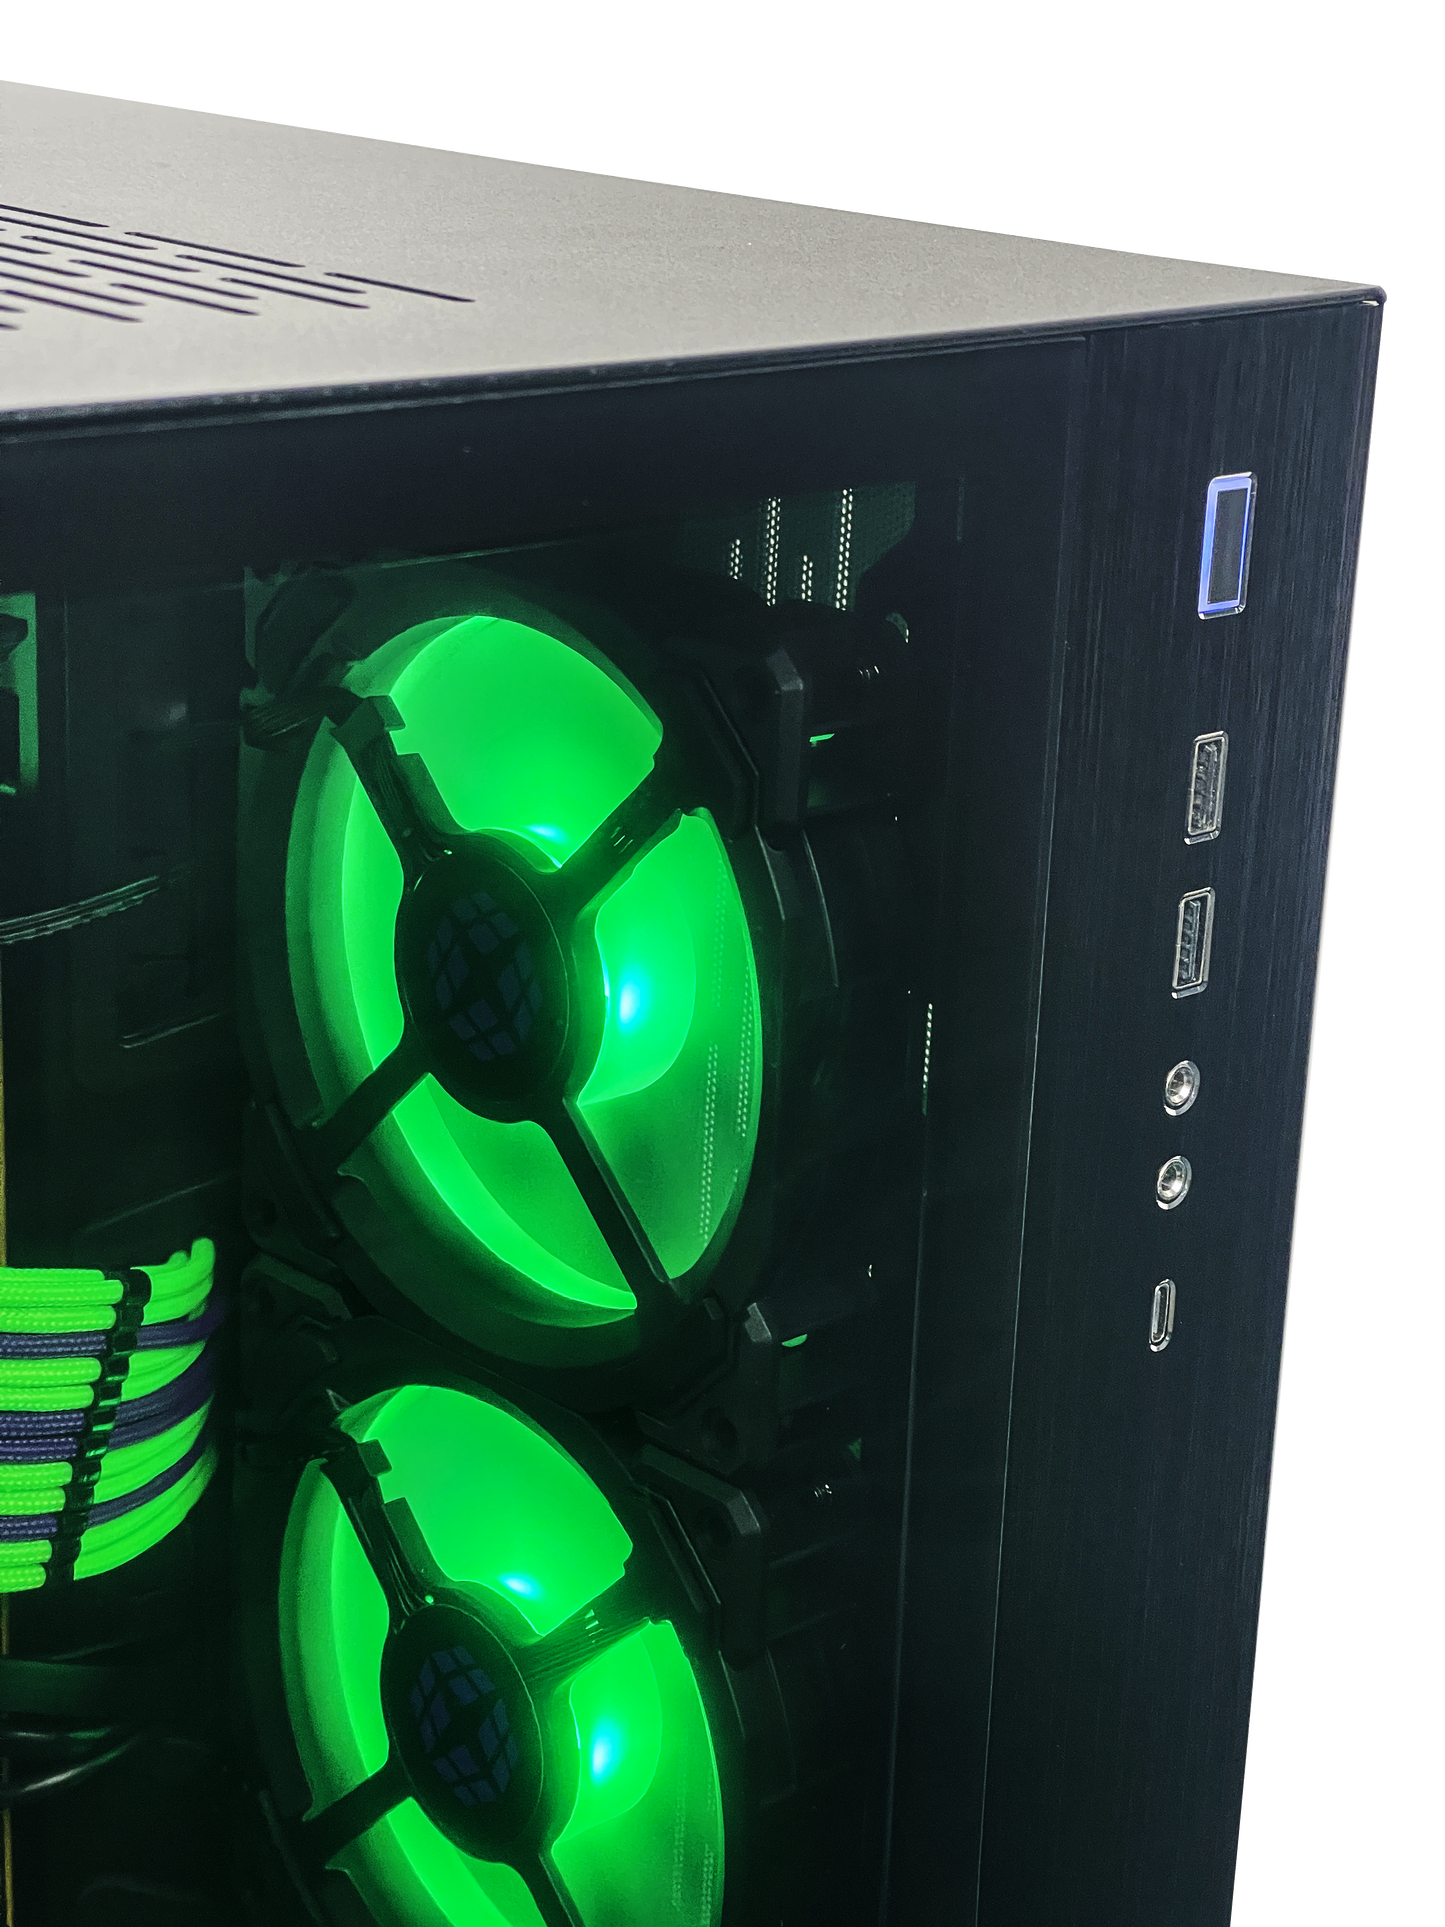 XOTIC PC GX11 DYNAMIC Gaming Desktop w/ INTEL Z690/Z790 & DDR4